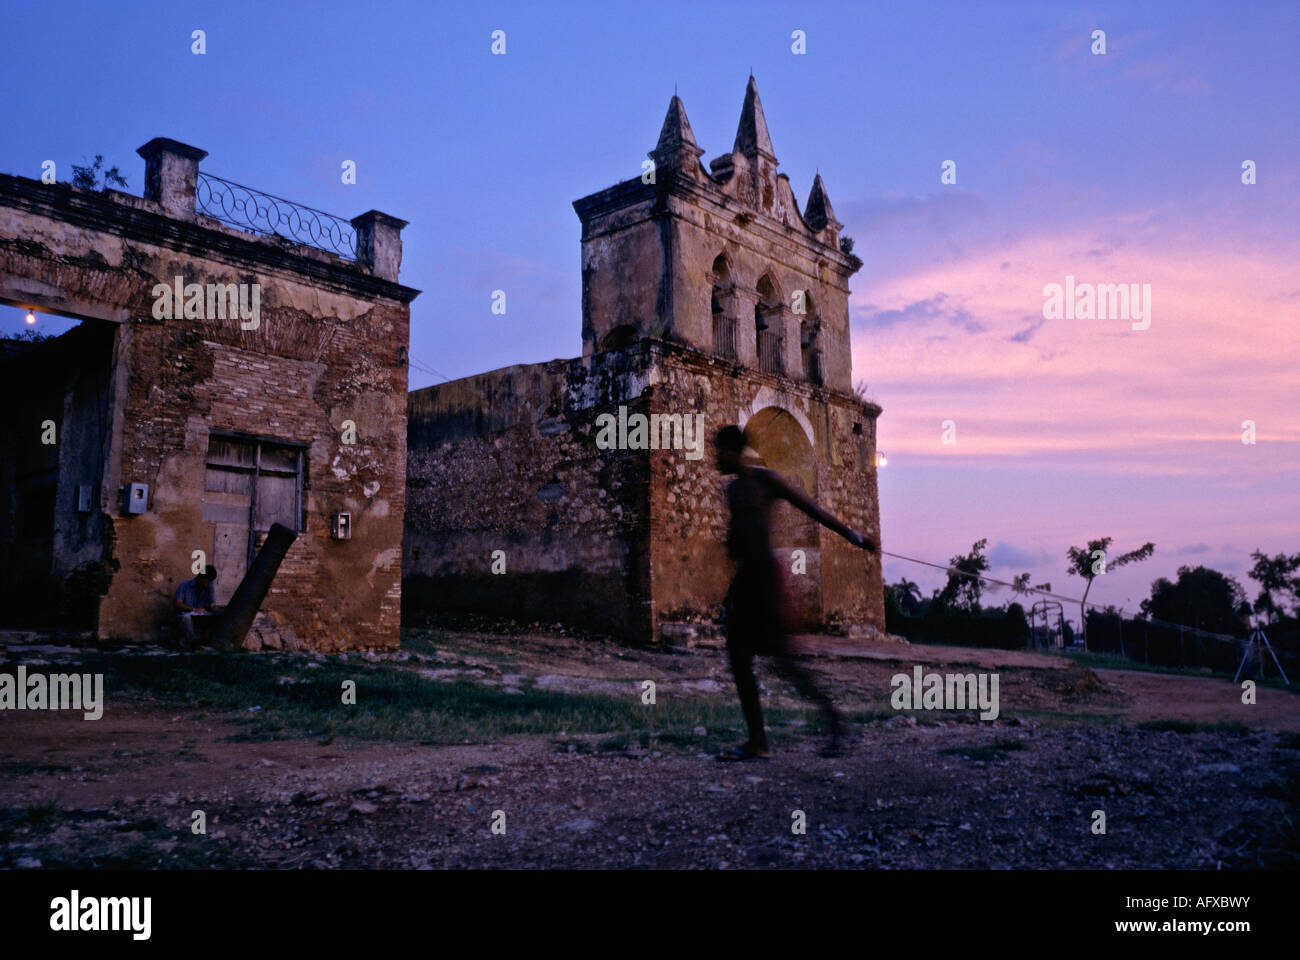 Ermita de la Popa a former church and prominent landmark on a hill overlooking Trinidad Cuba at sunset Stock Photo